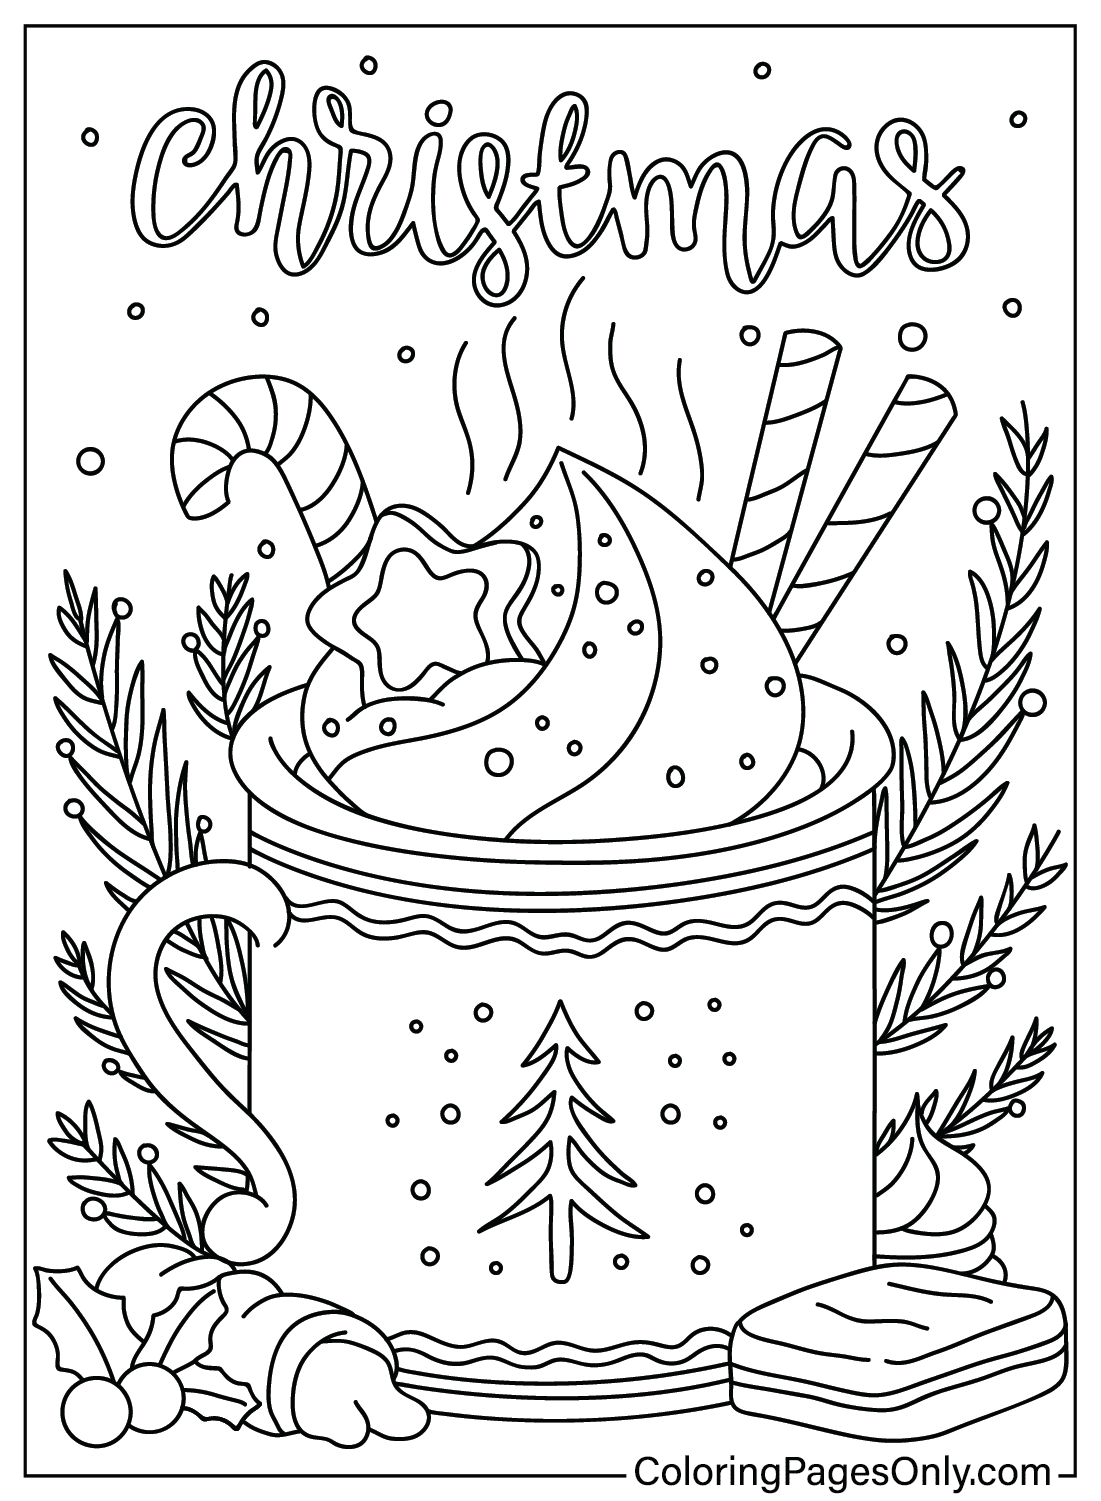 Página colorida de Milkshake de Natal from Christmas Milkshake